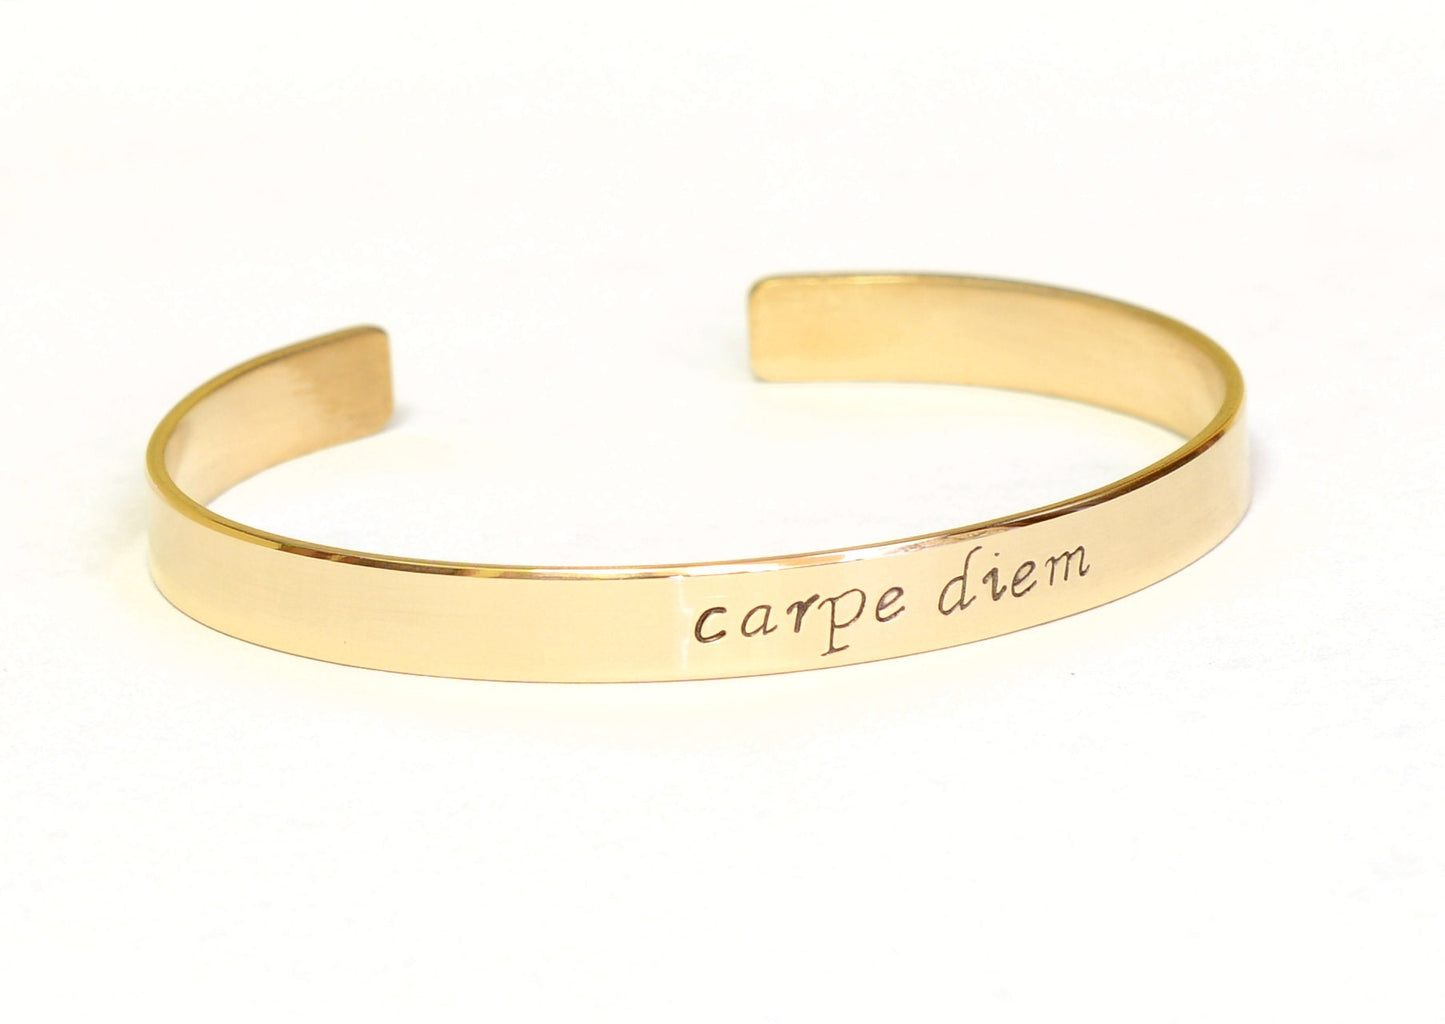 Carpe diem bronze bracelet to seize the day